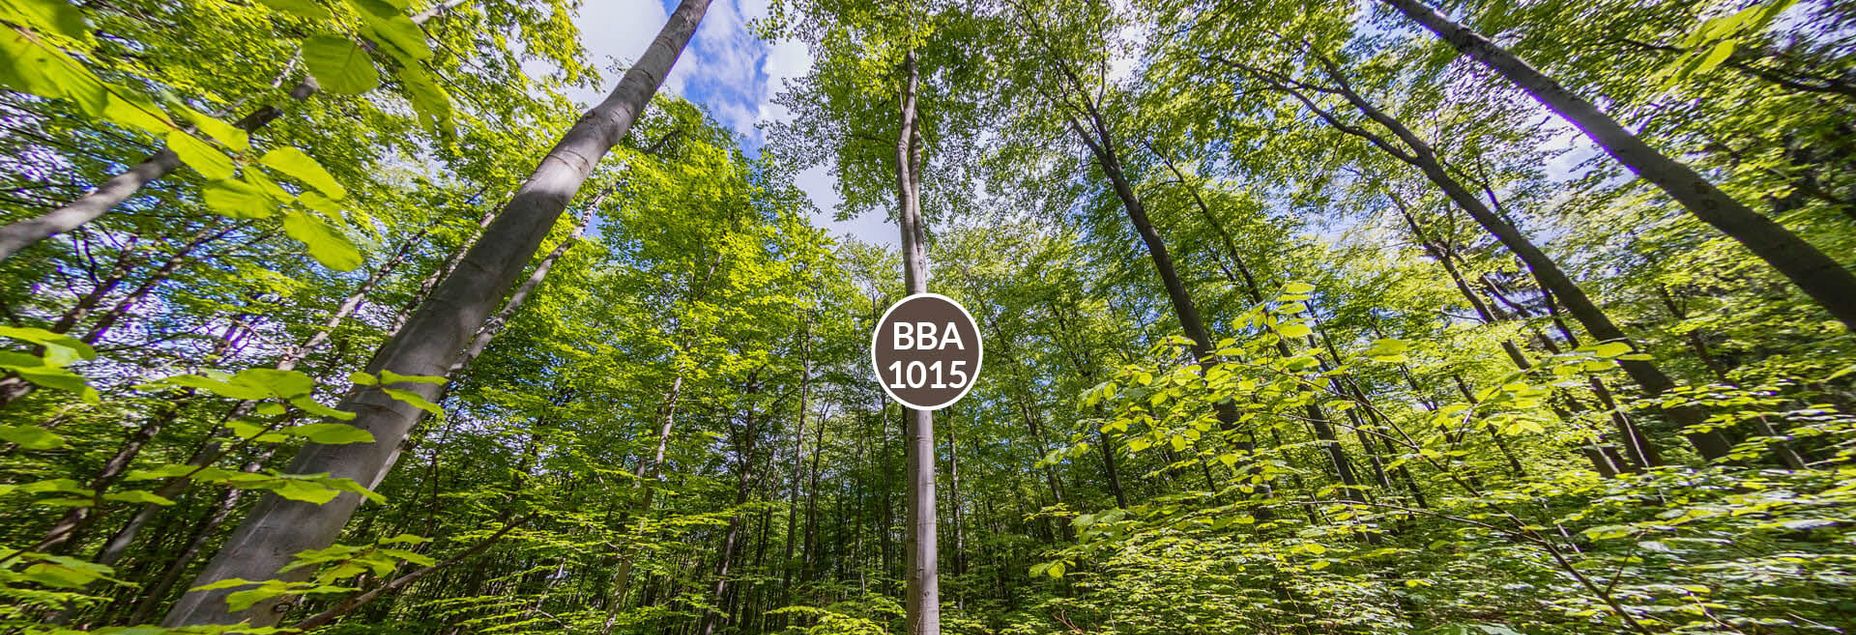 Baum BBA 1015 - Fisheyeperspektive